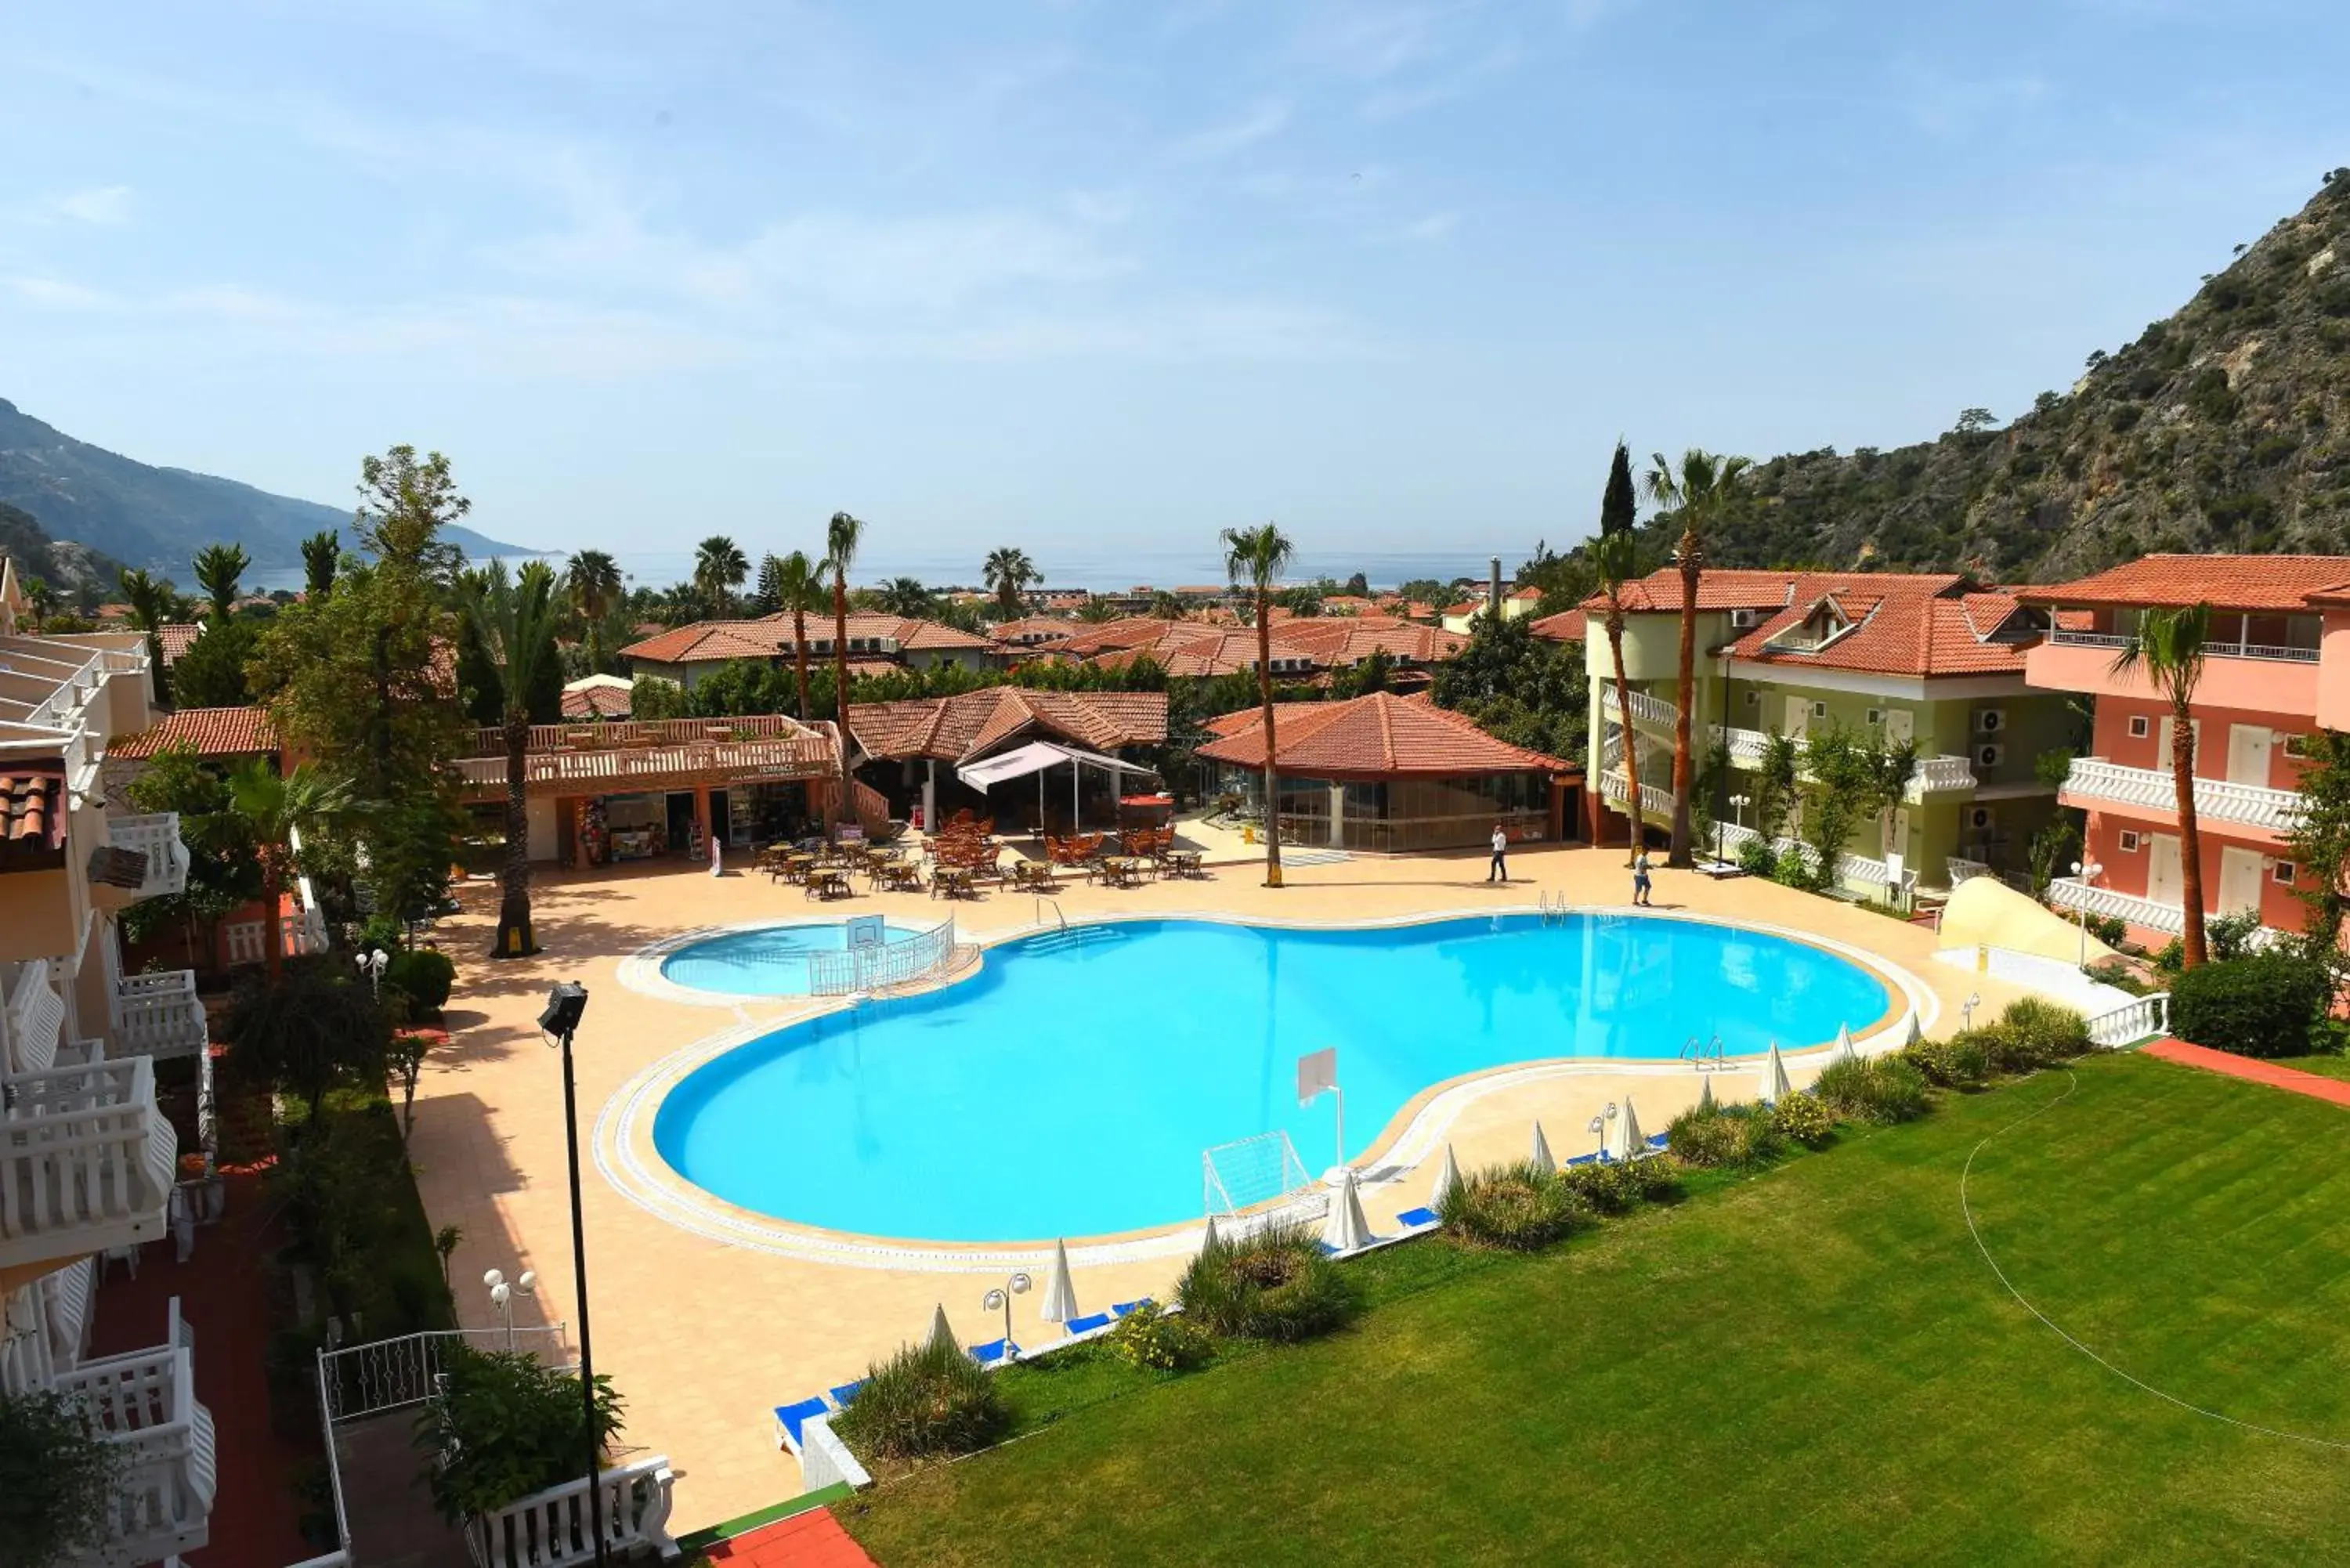 Day, Swimming Pool in Oludeniz Turquoise Hotel